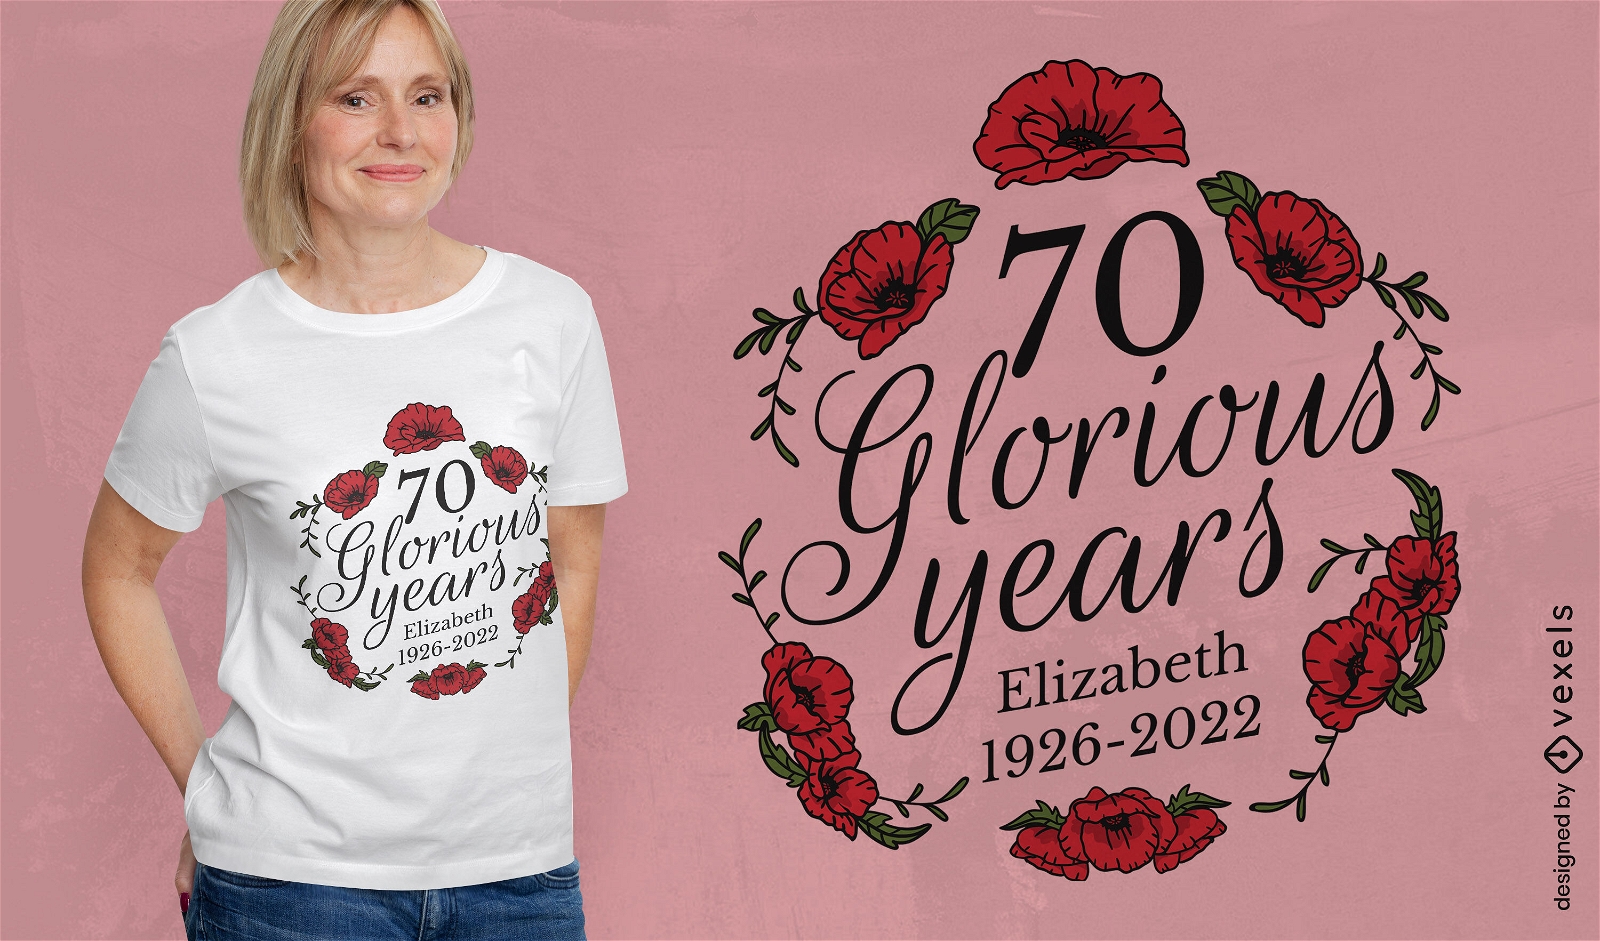 Diseño de camiseta conmemorativa de flor rosa.